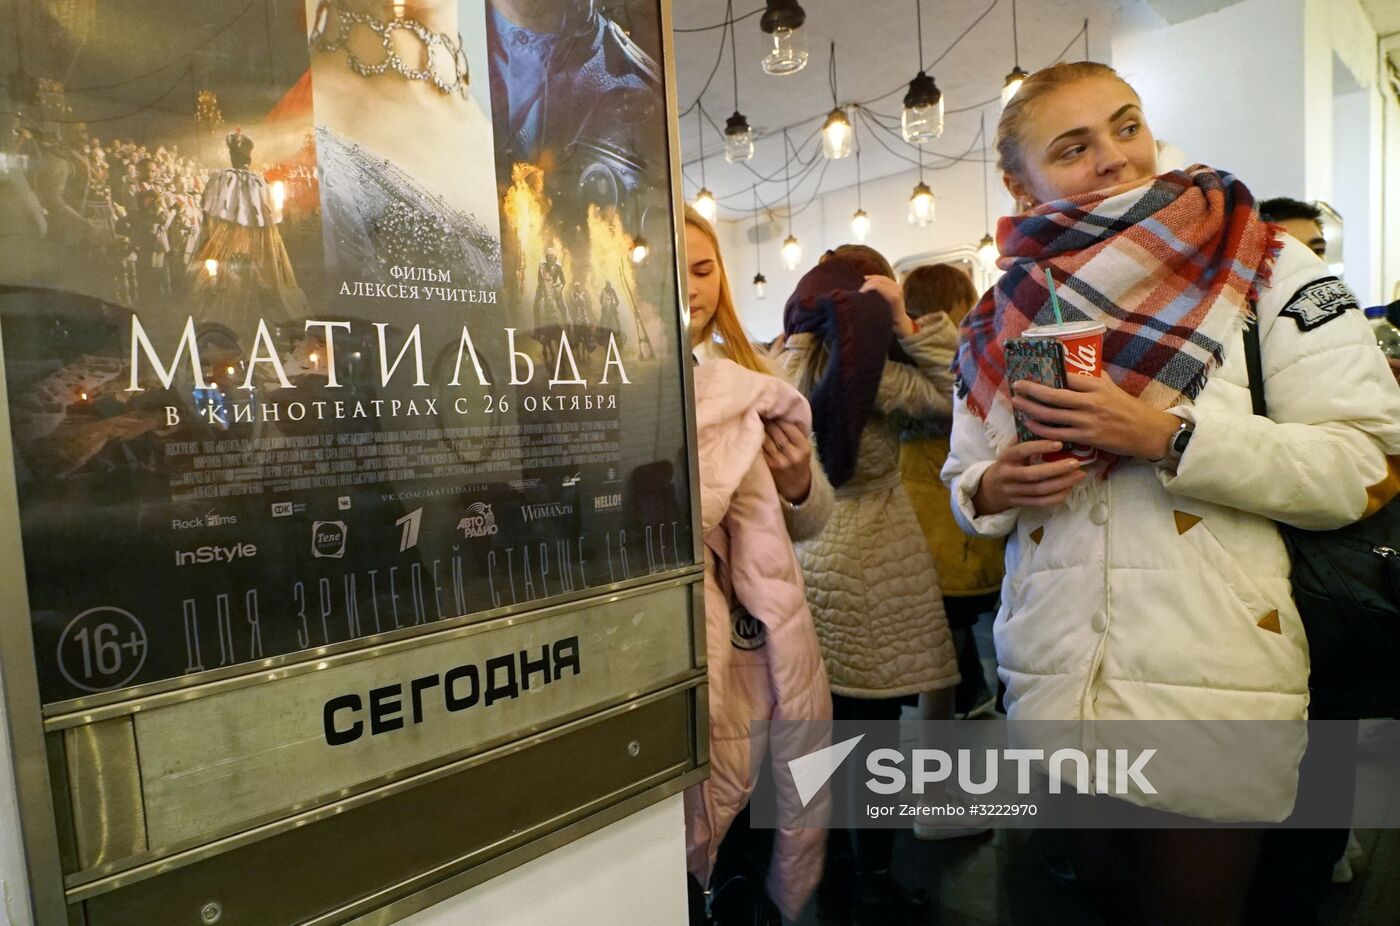 Alexei Uchitel's Matilda premiere screening in Kaliningrad